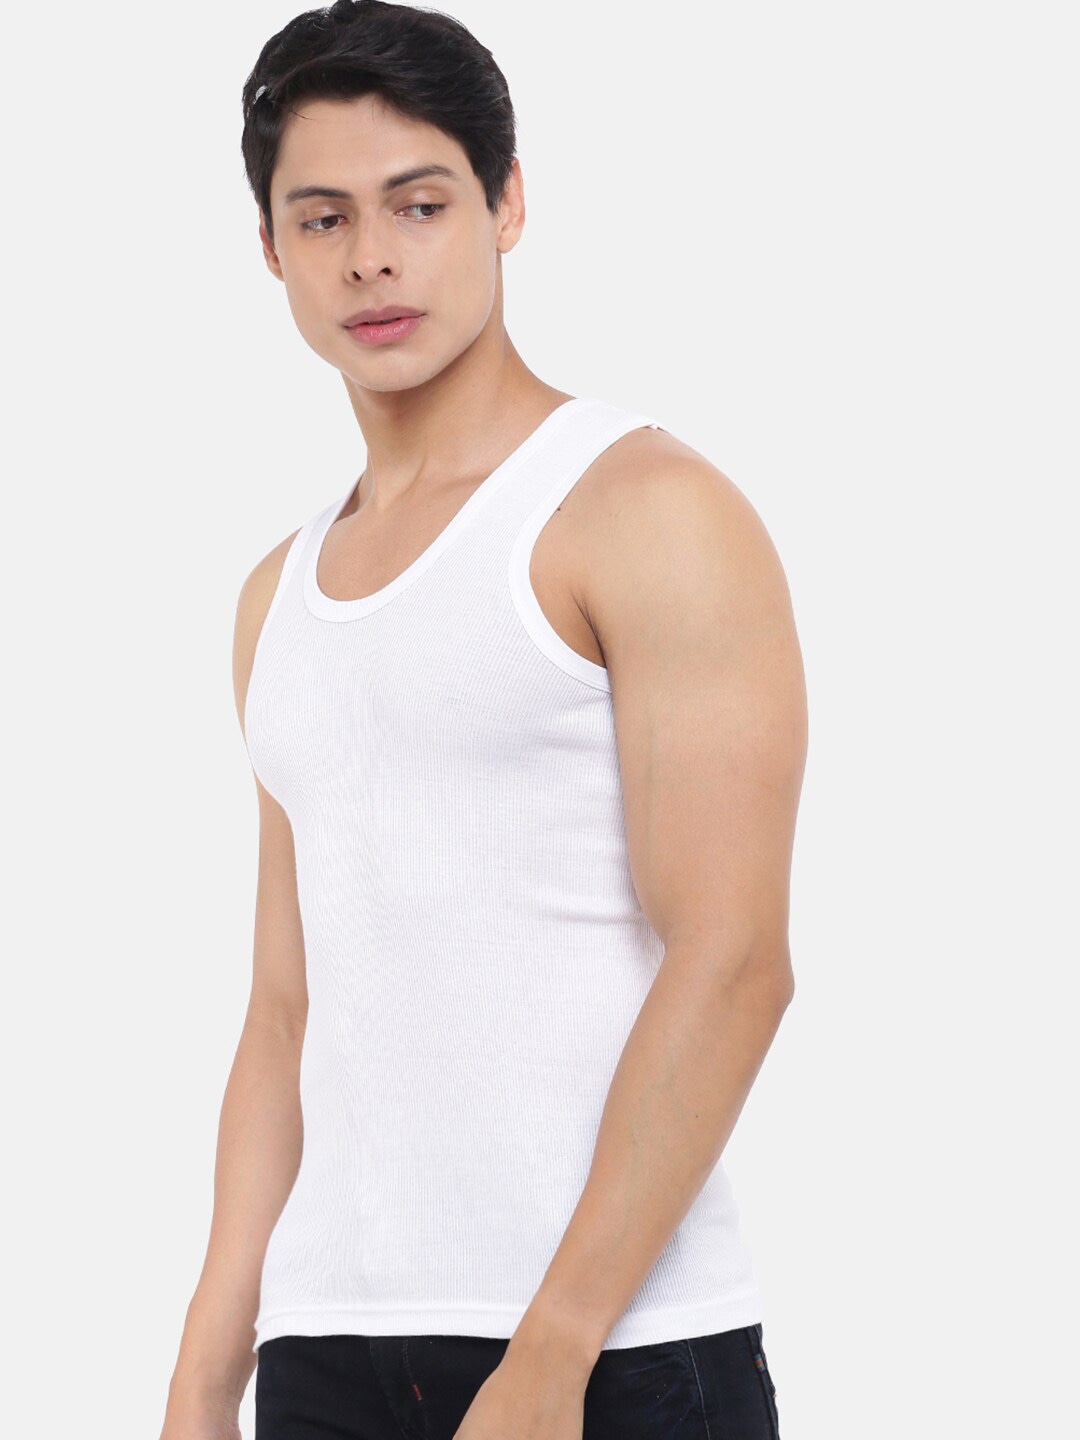 Clothing Innerwear Vests | Dollar Bigboss Men Pack of 4 White Solid Cotton Innerwear Vests MBVE-06-R2-DERBY - WO48406